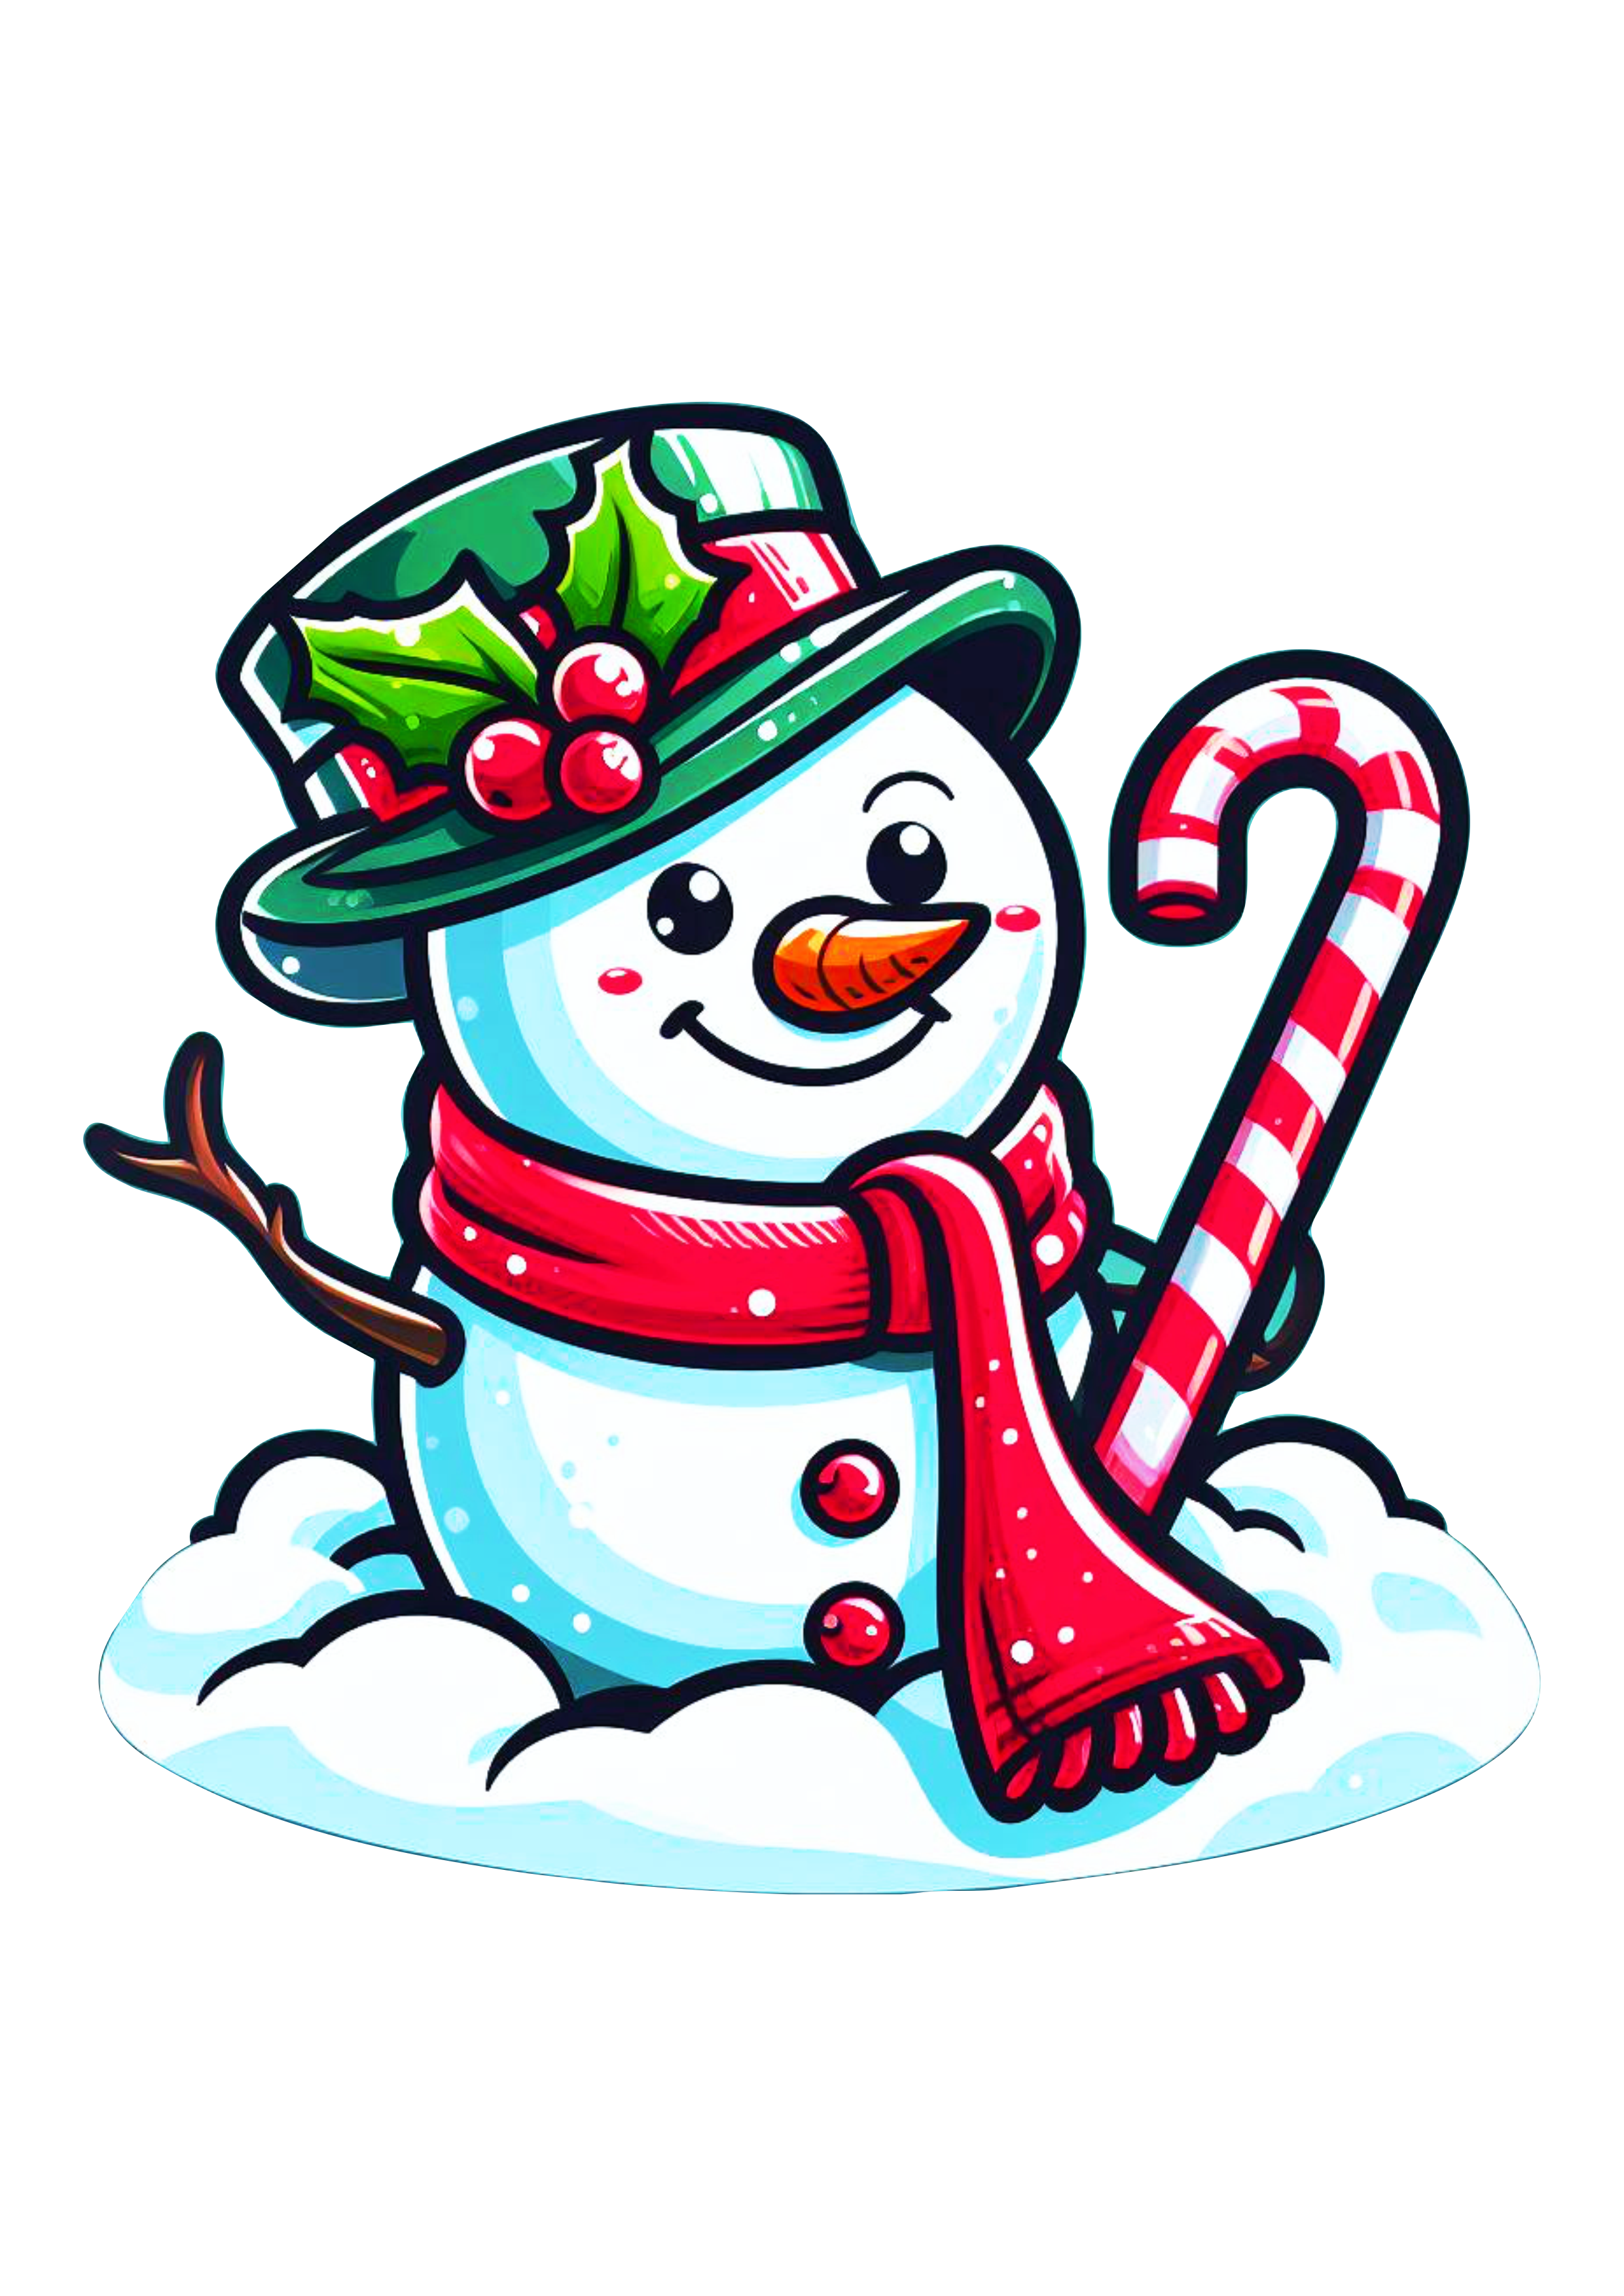 Boneco de neve snowman png